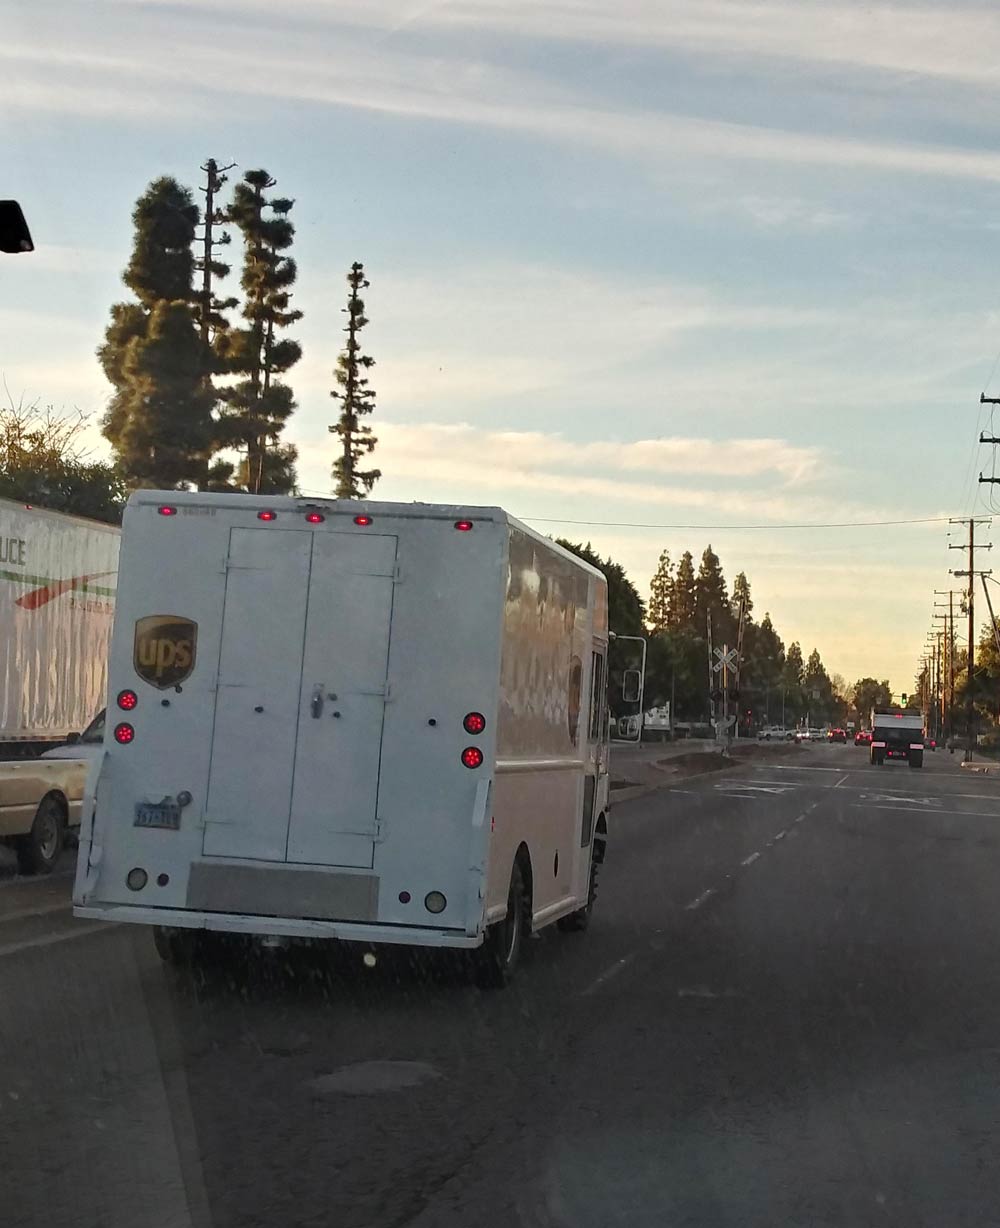 A rare albino UPS truck spotted in the wild